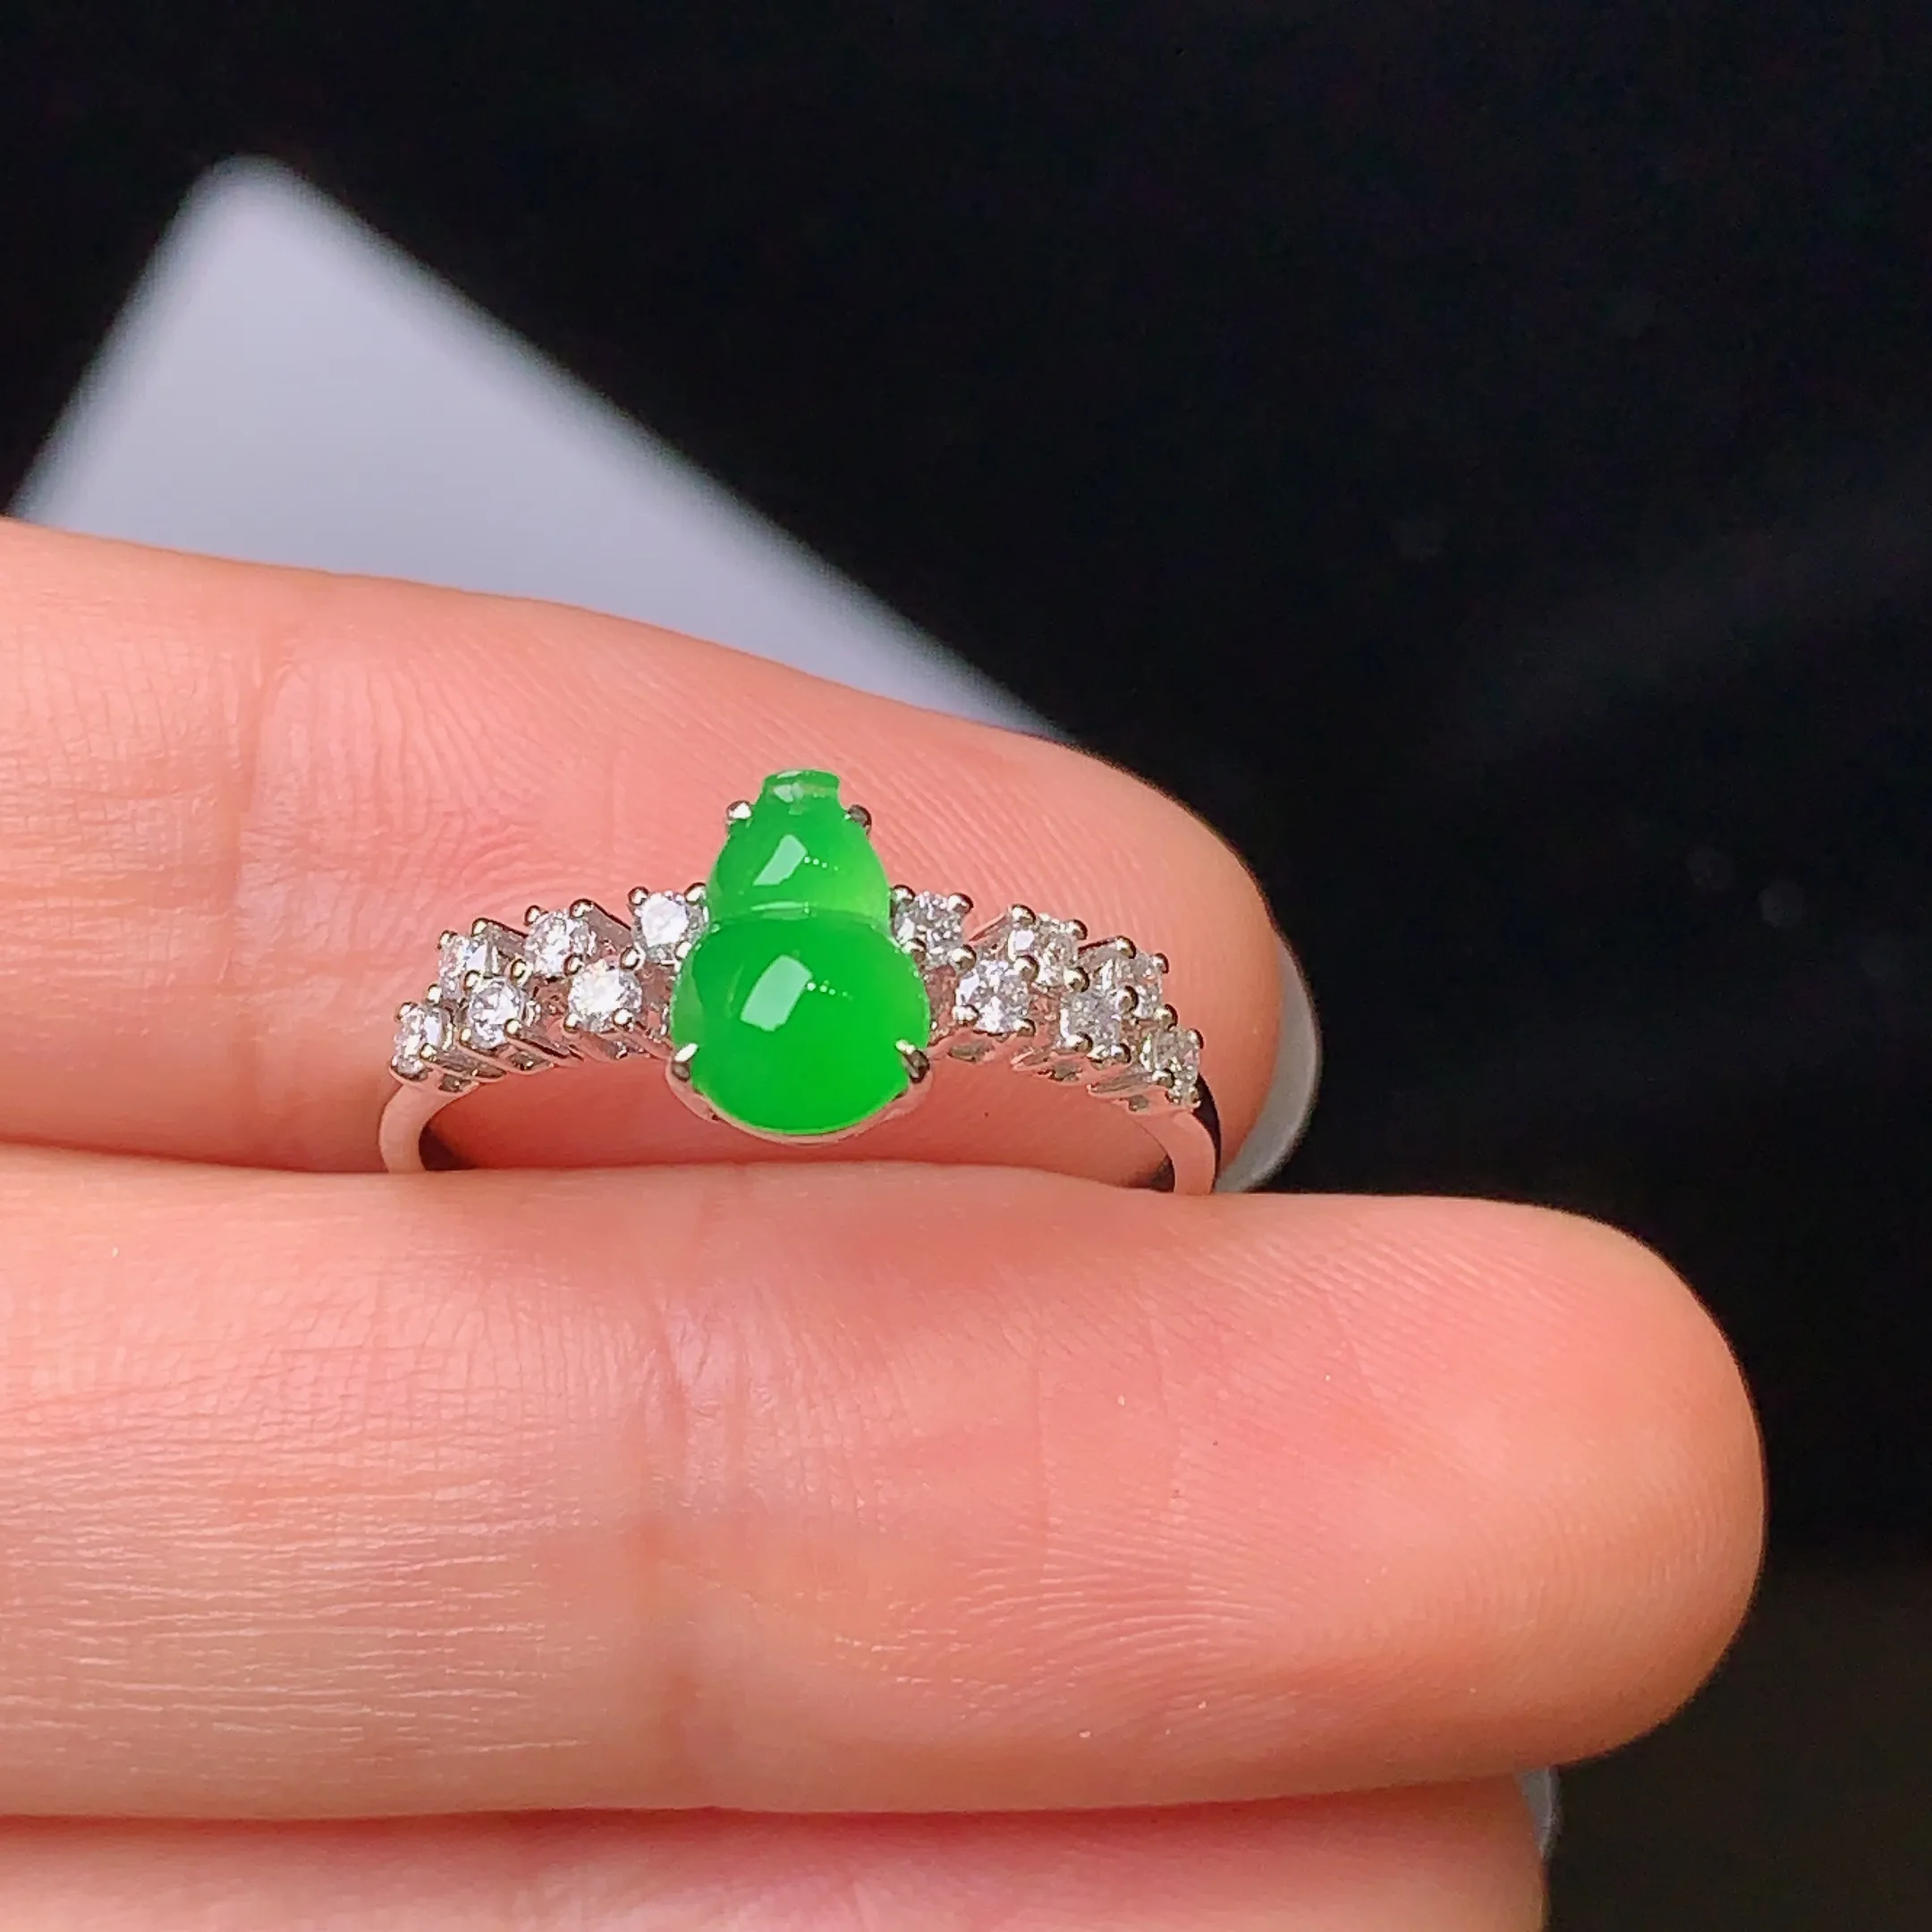 18k金钻镶嵌满绿葫芦戒指 玉质细腻 色泽艳丽 款式新颖时尚唯美 圈口14.5 裸石尺寸7.5*5.